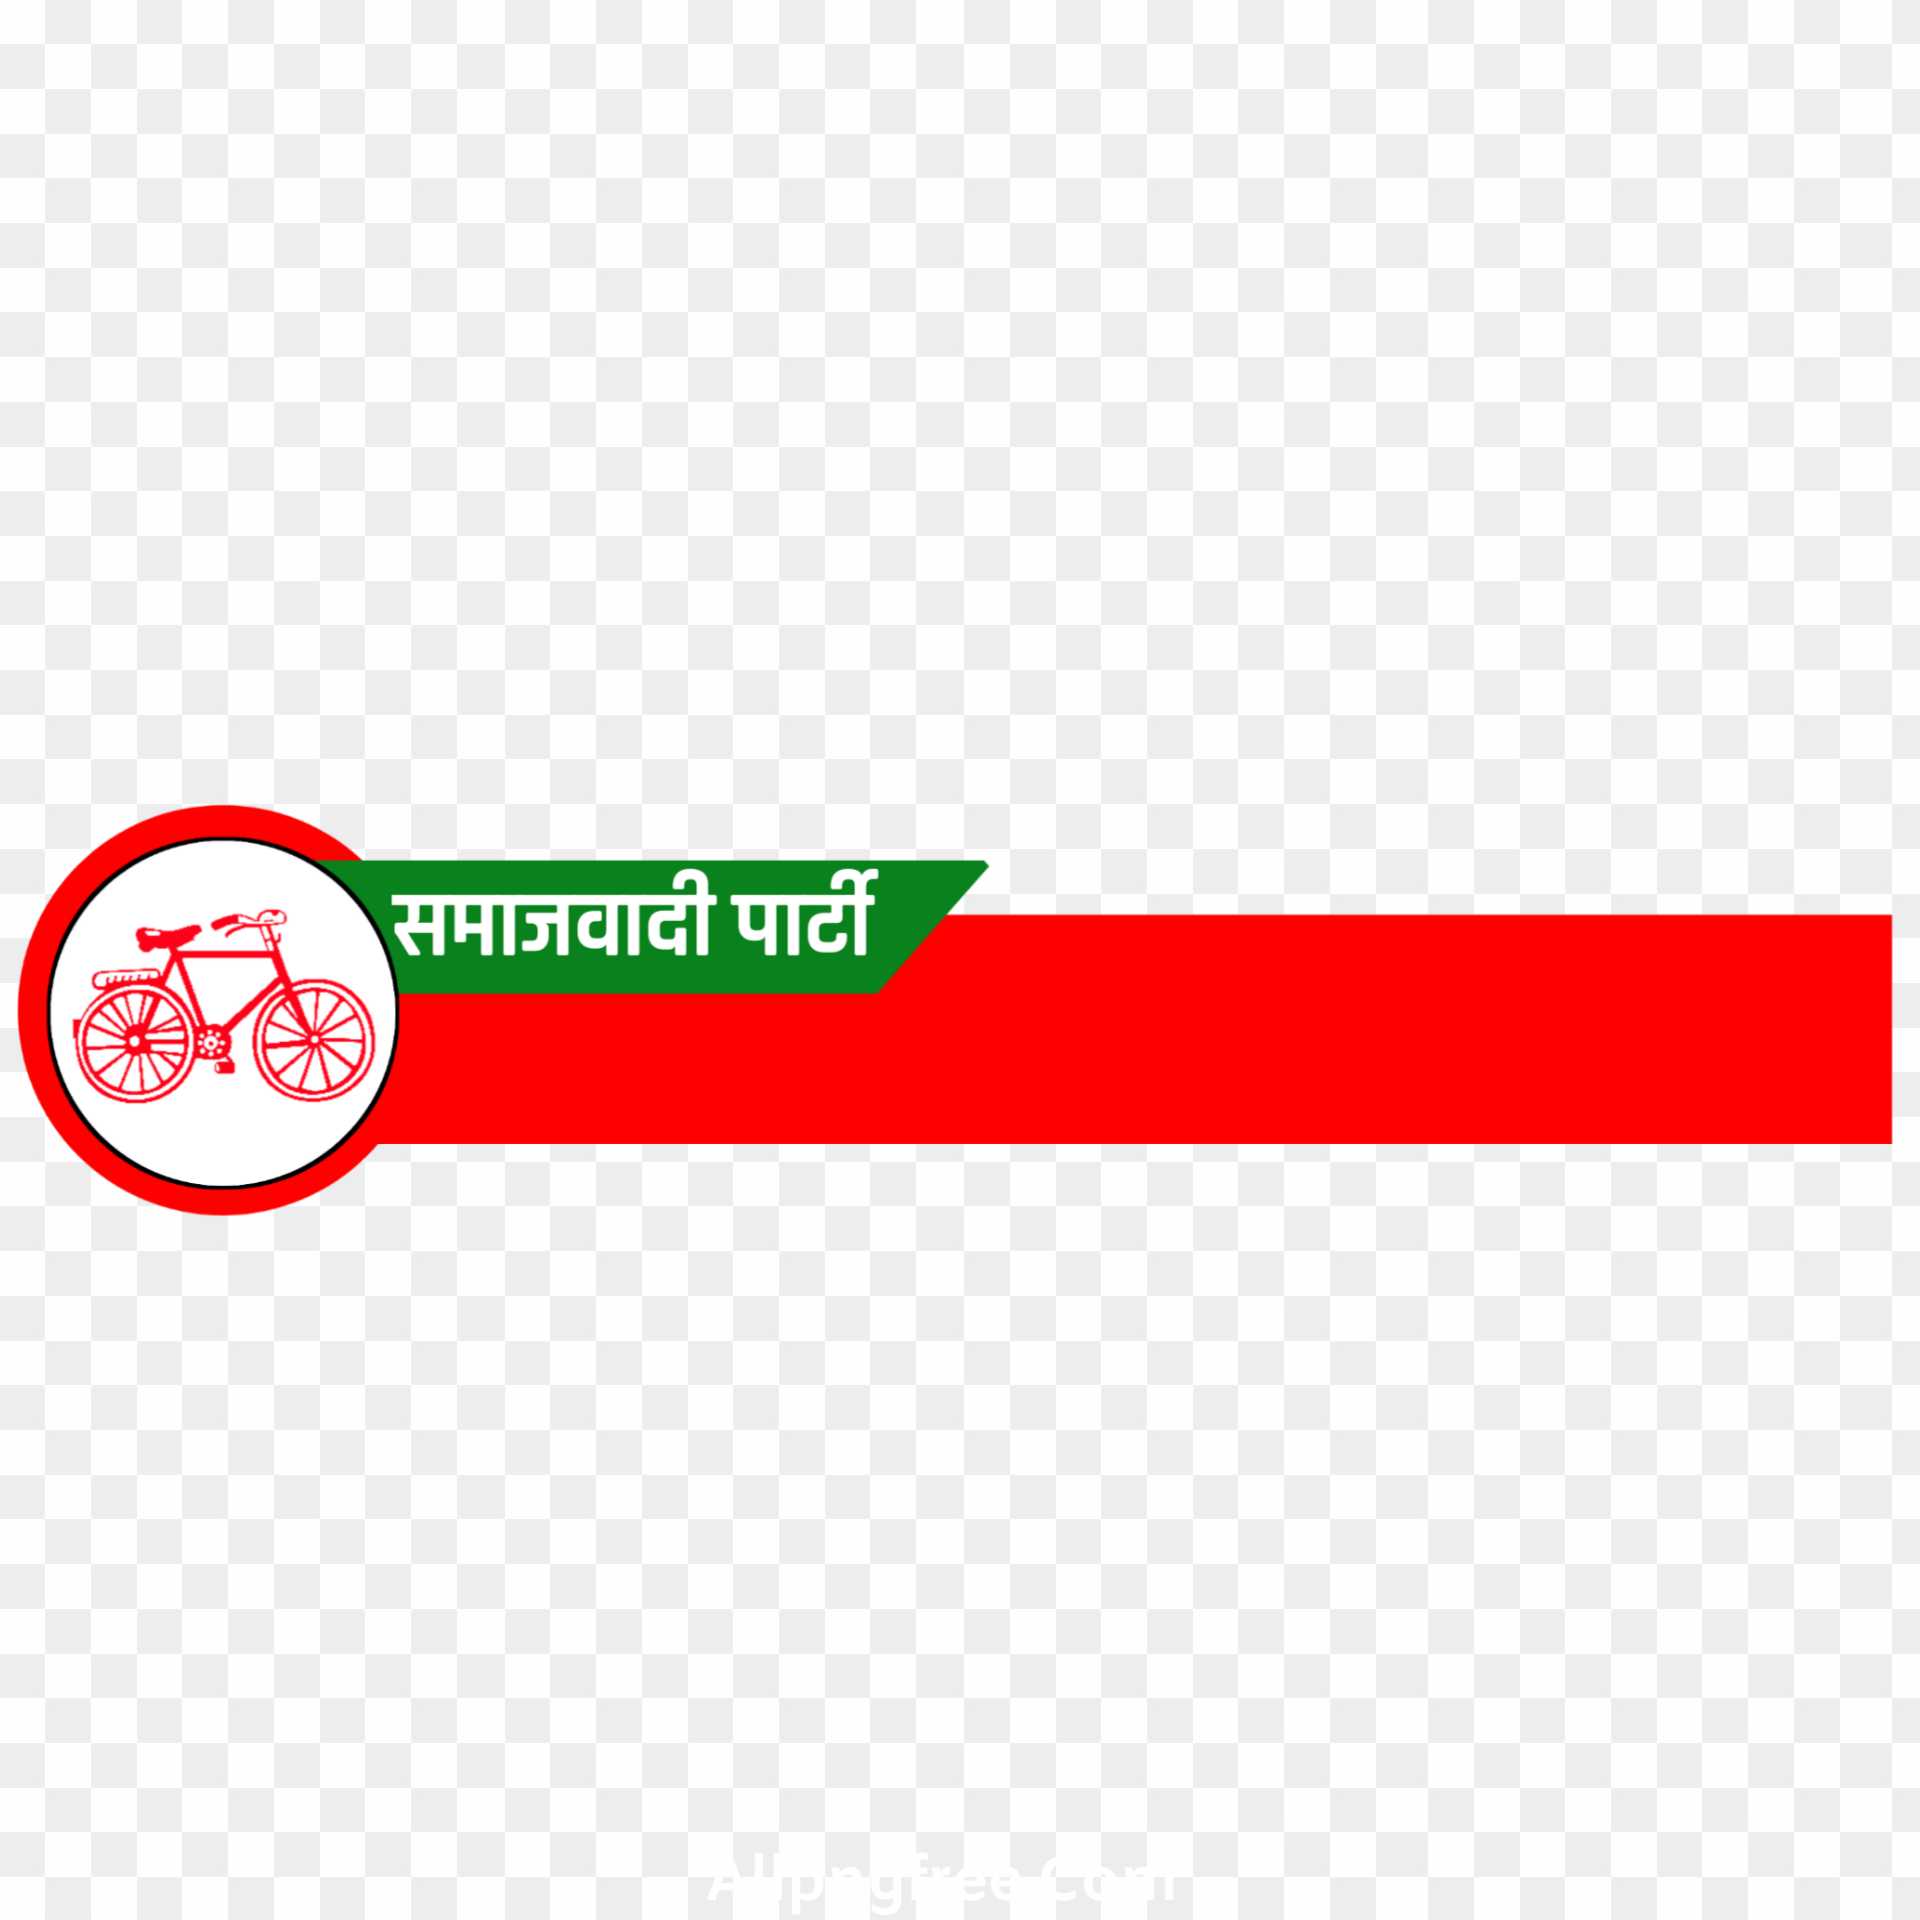 Samajwadi Party sp intro banner png images 